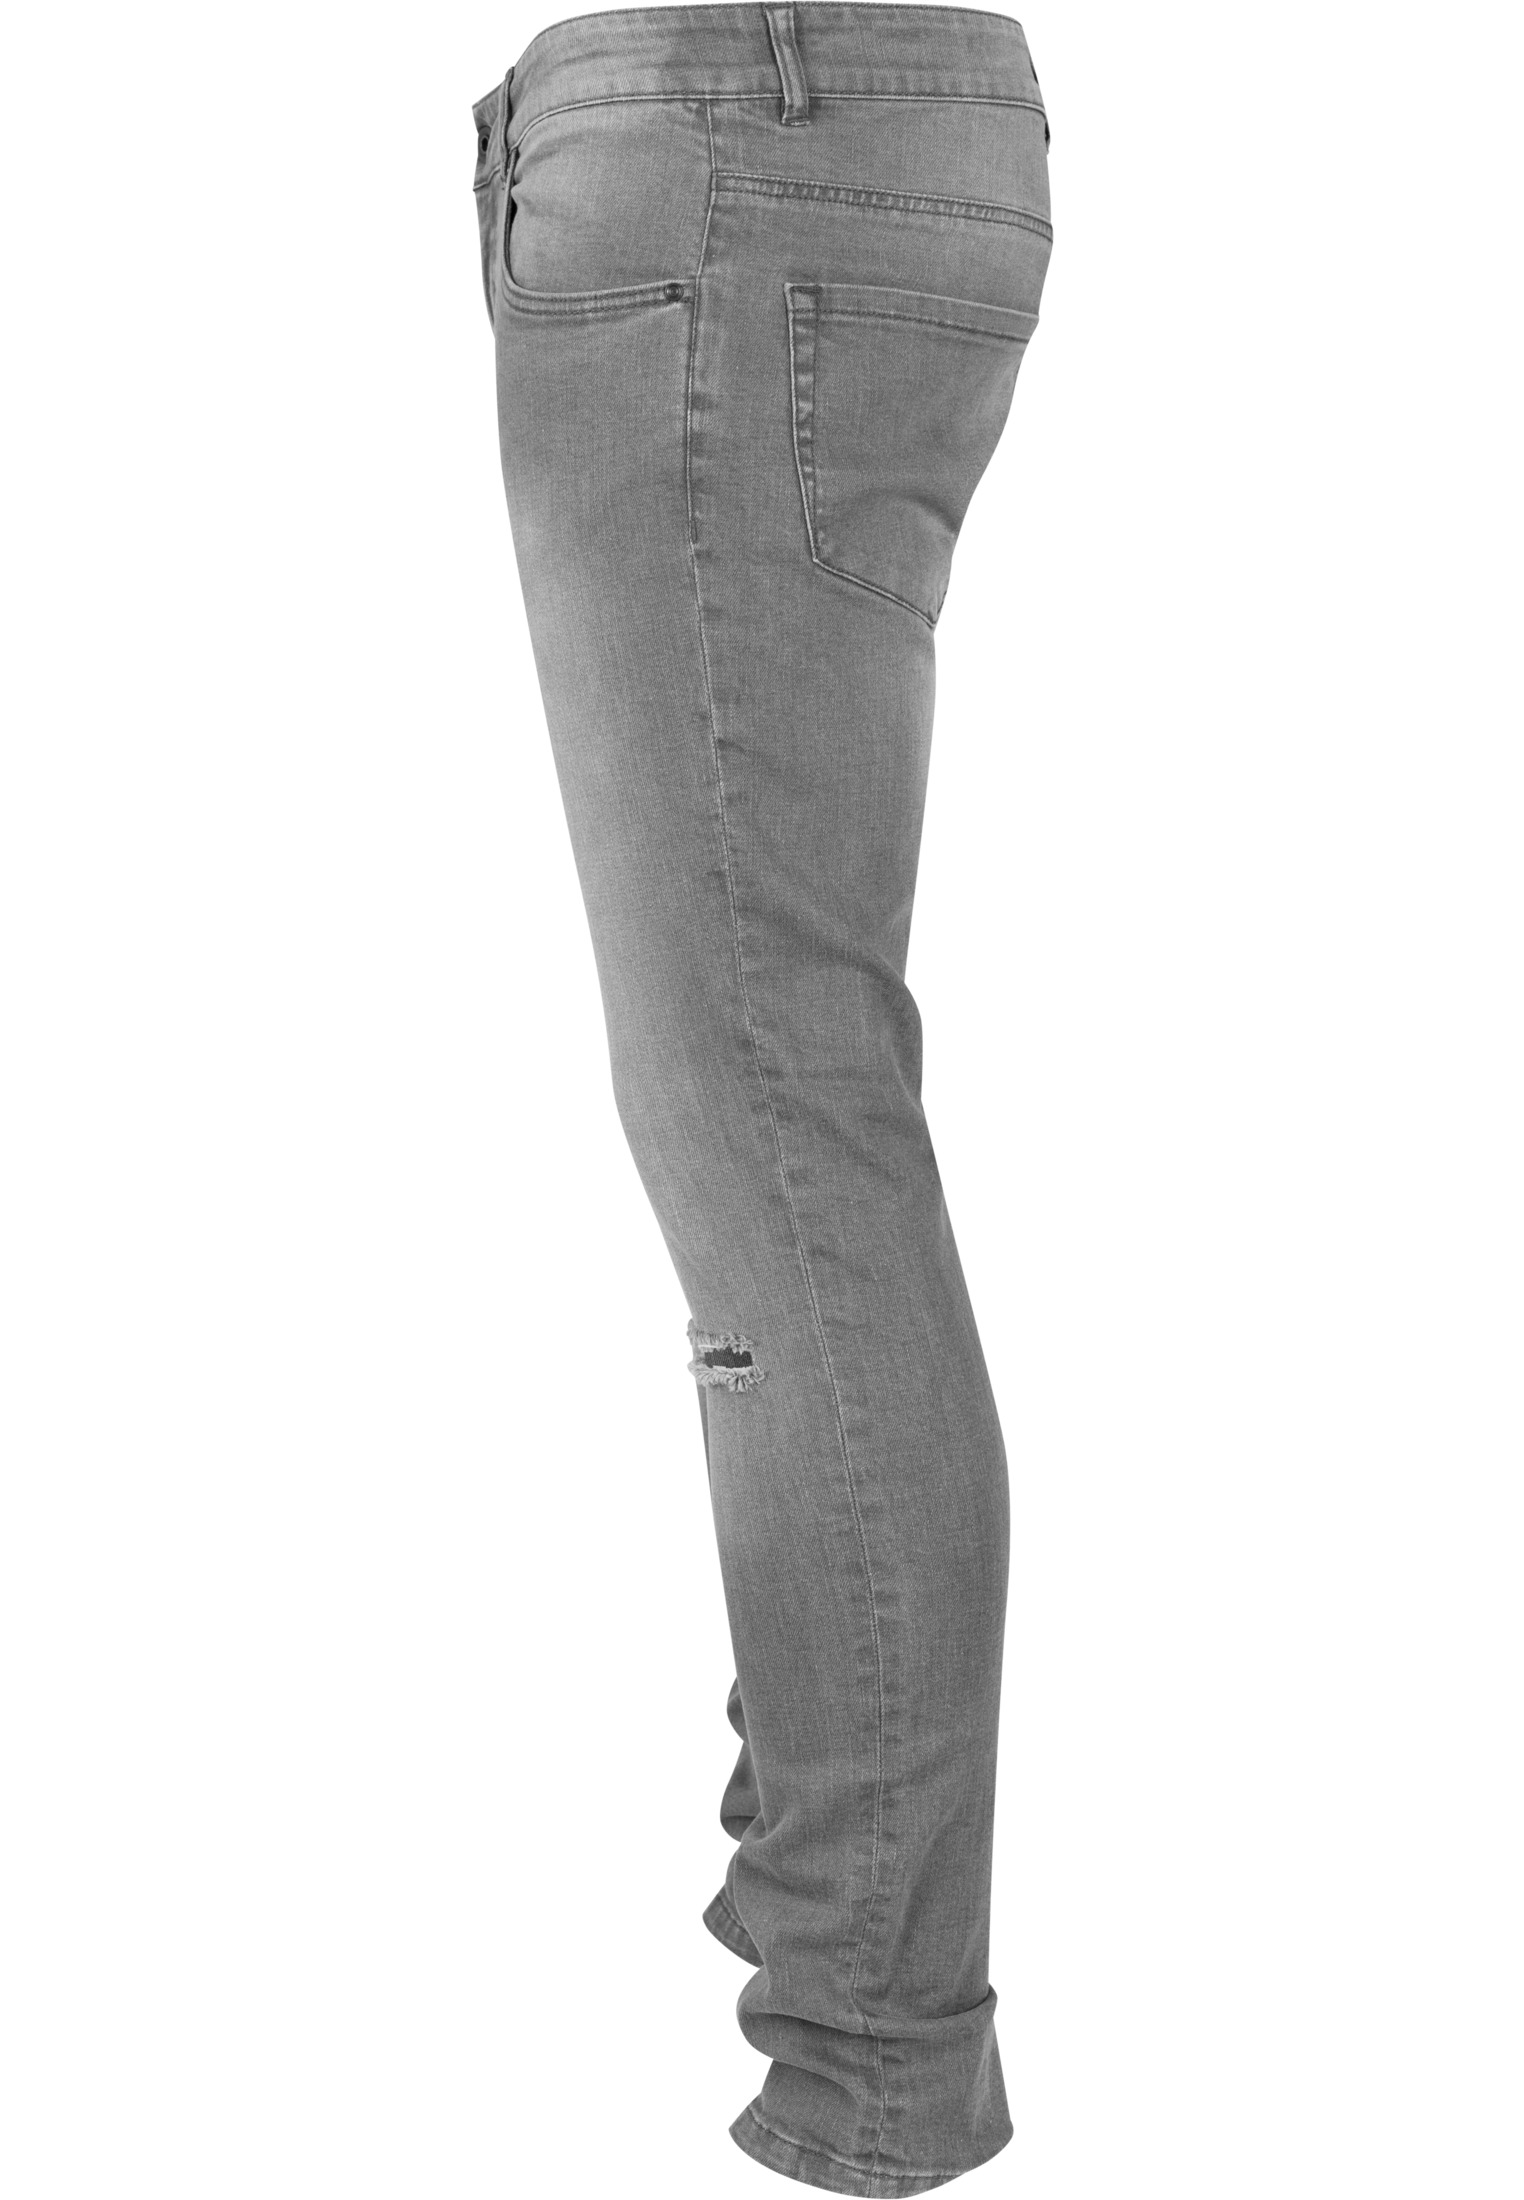 Hosen Slim Fit Knee Cut Denim Pants in Farbe grey